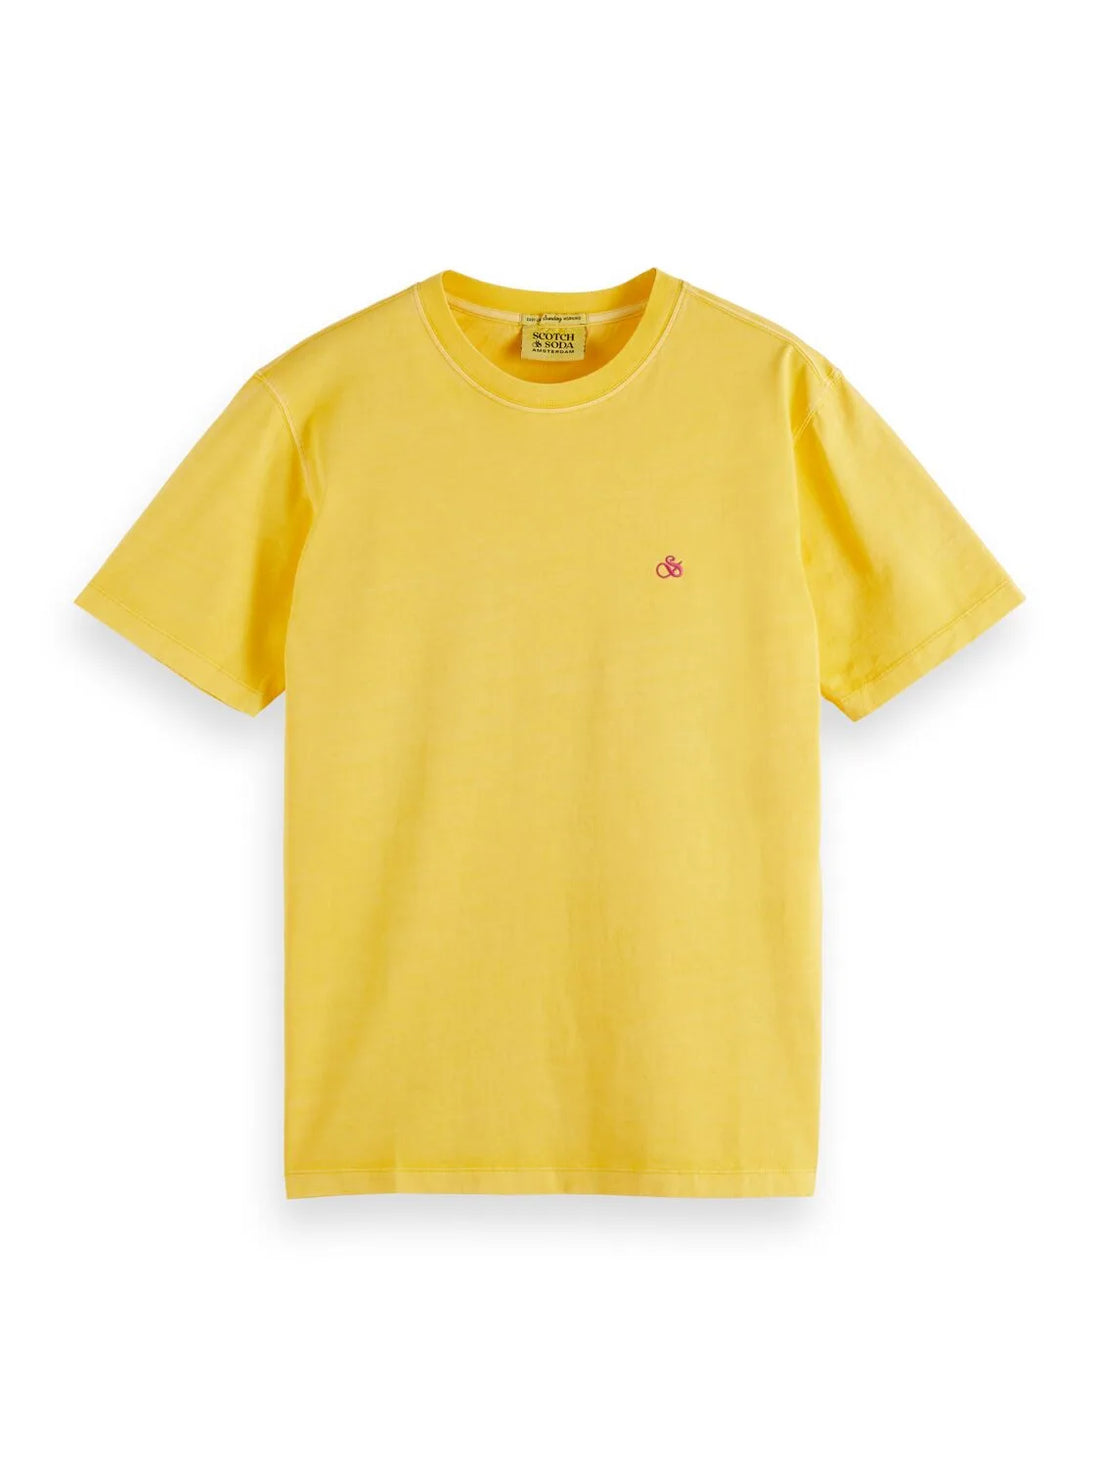 Garment dye logo embroidery tee Bright Yellow